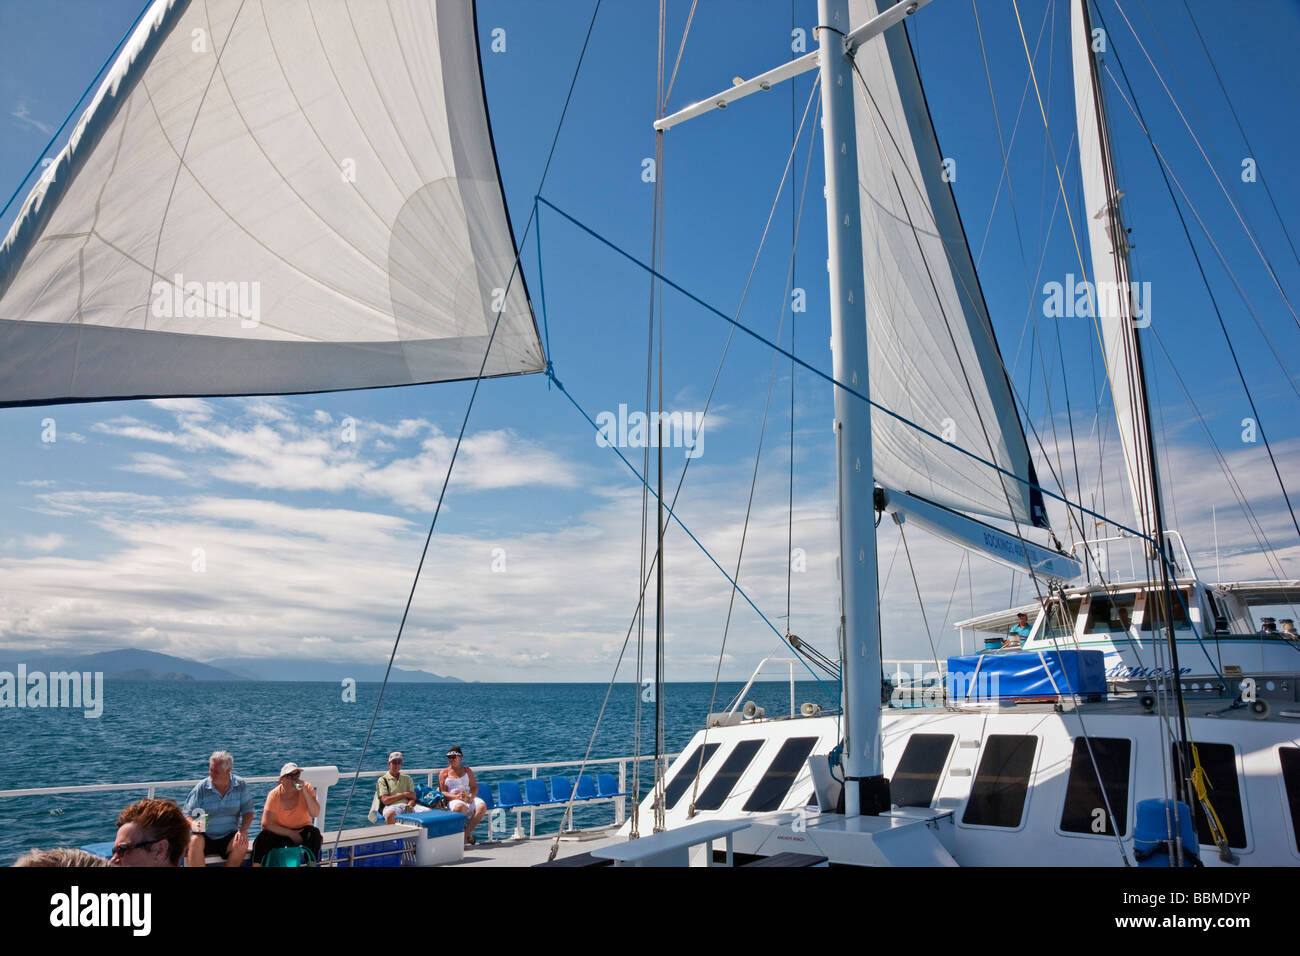 Australia, Queensland. Wavedancer - a luxury sailing catamaran - takes tourists on day trips to Low Isles Stock Photo